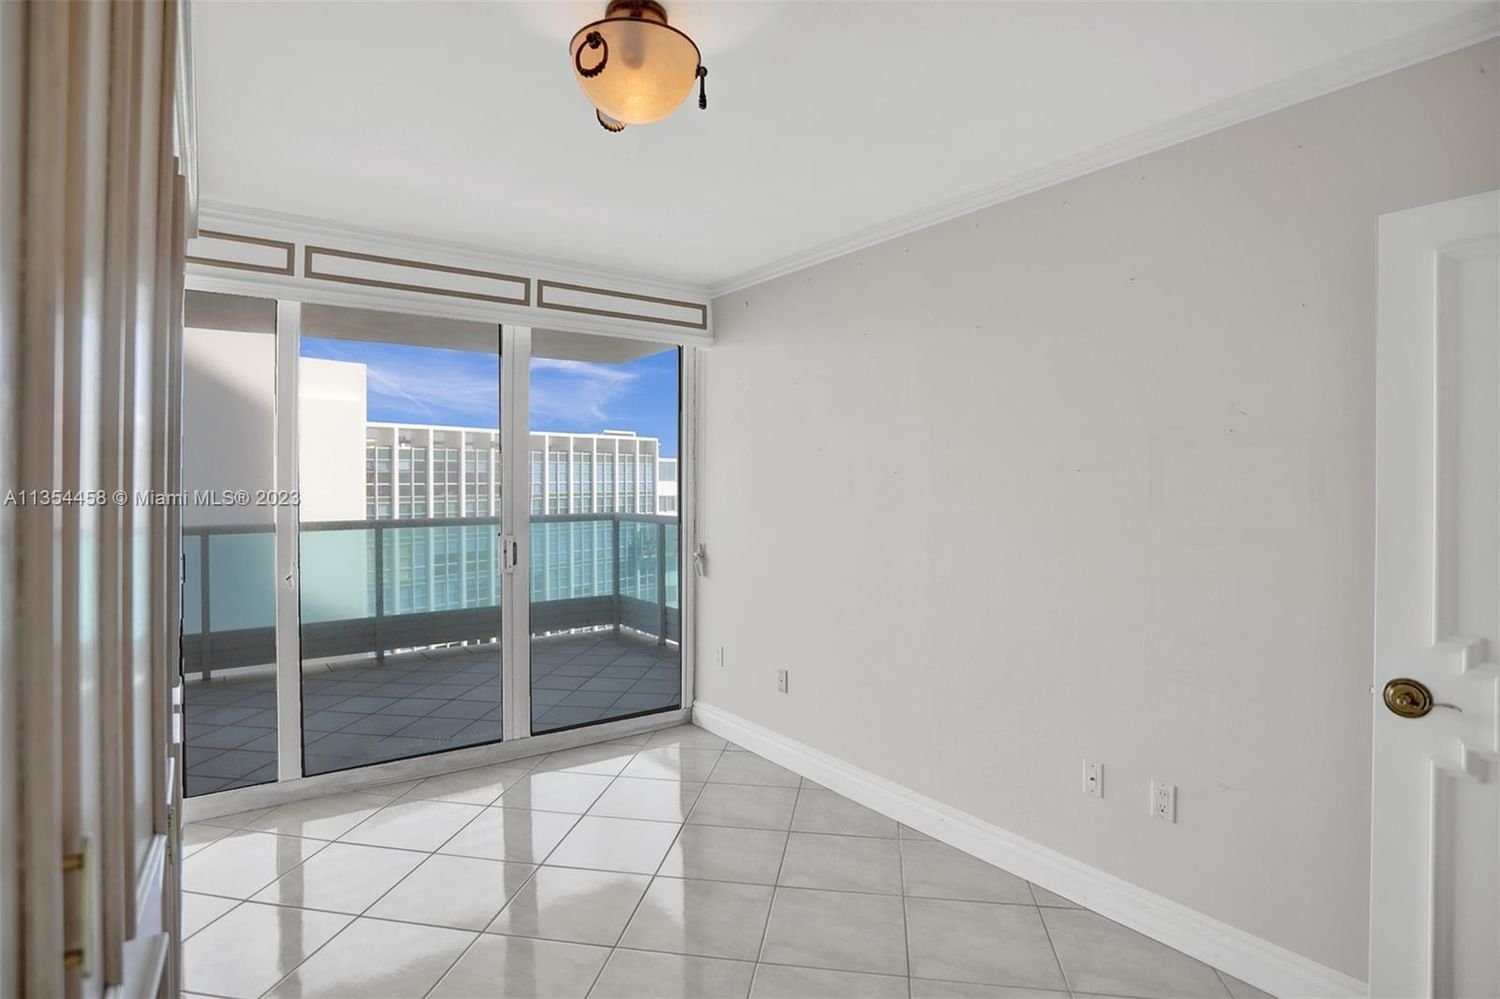 Real estate property located at 5025 Collins Ave #1401, Miami-Dade County, Miami Beach, FL